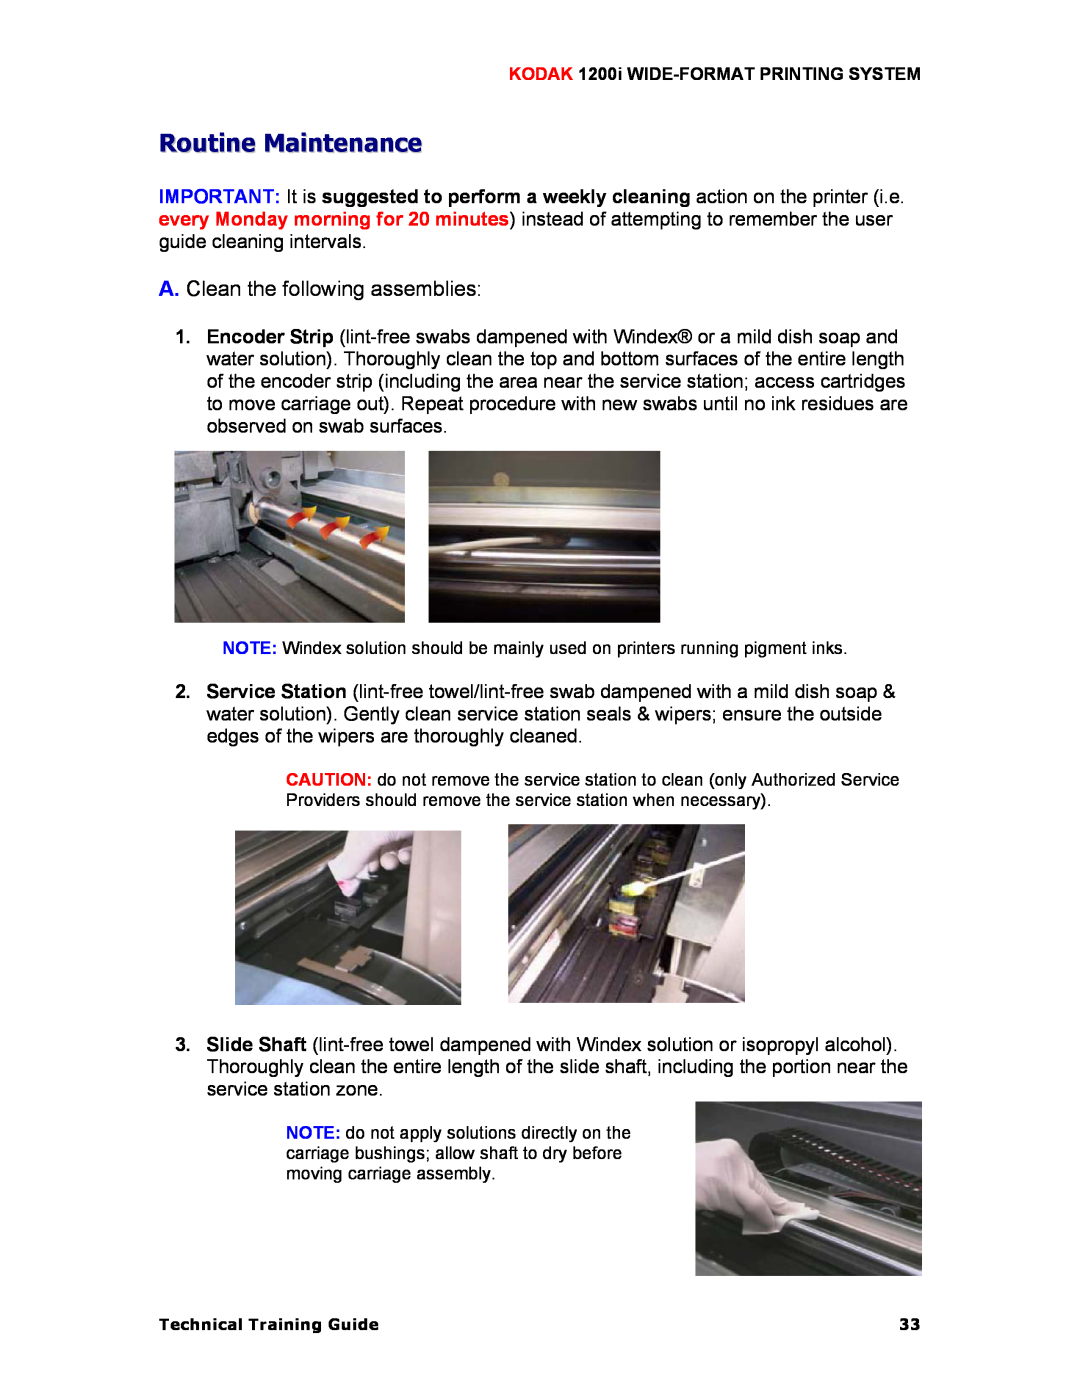 Kodak 1200I manual Routine Maintenance, A. Clean the following assemblies 